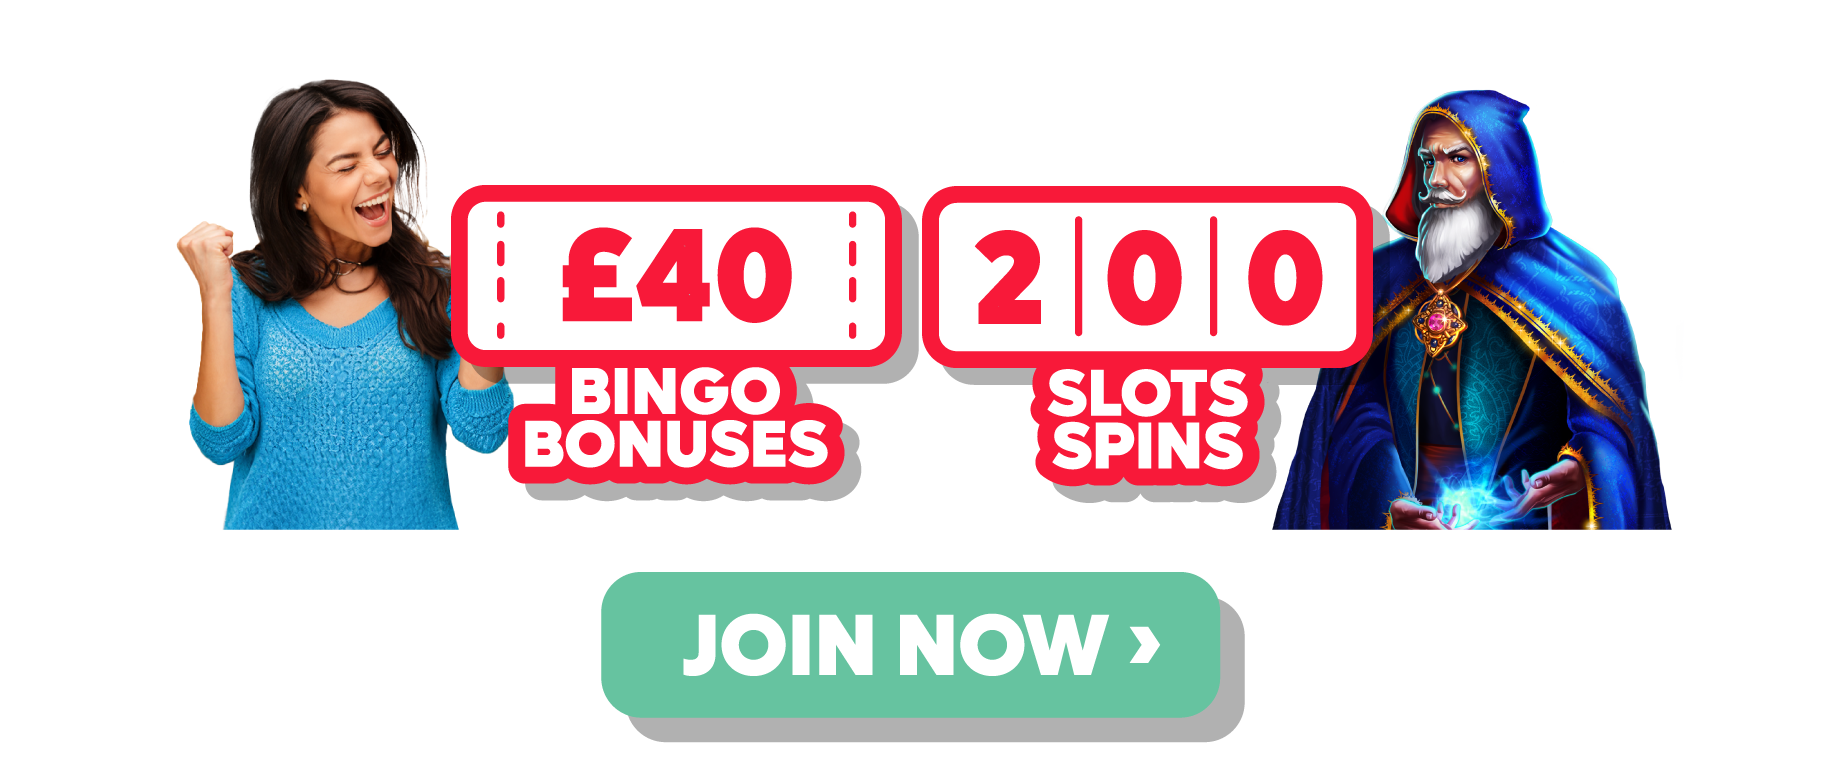 £40 Bingo Bonuses • 200 Slots Spins • Join now ›